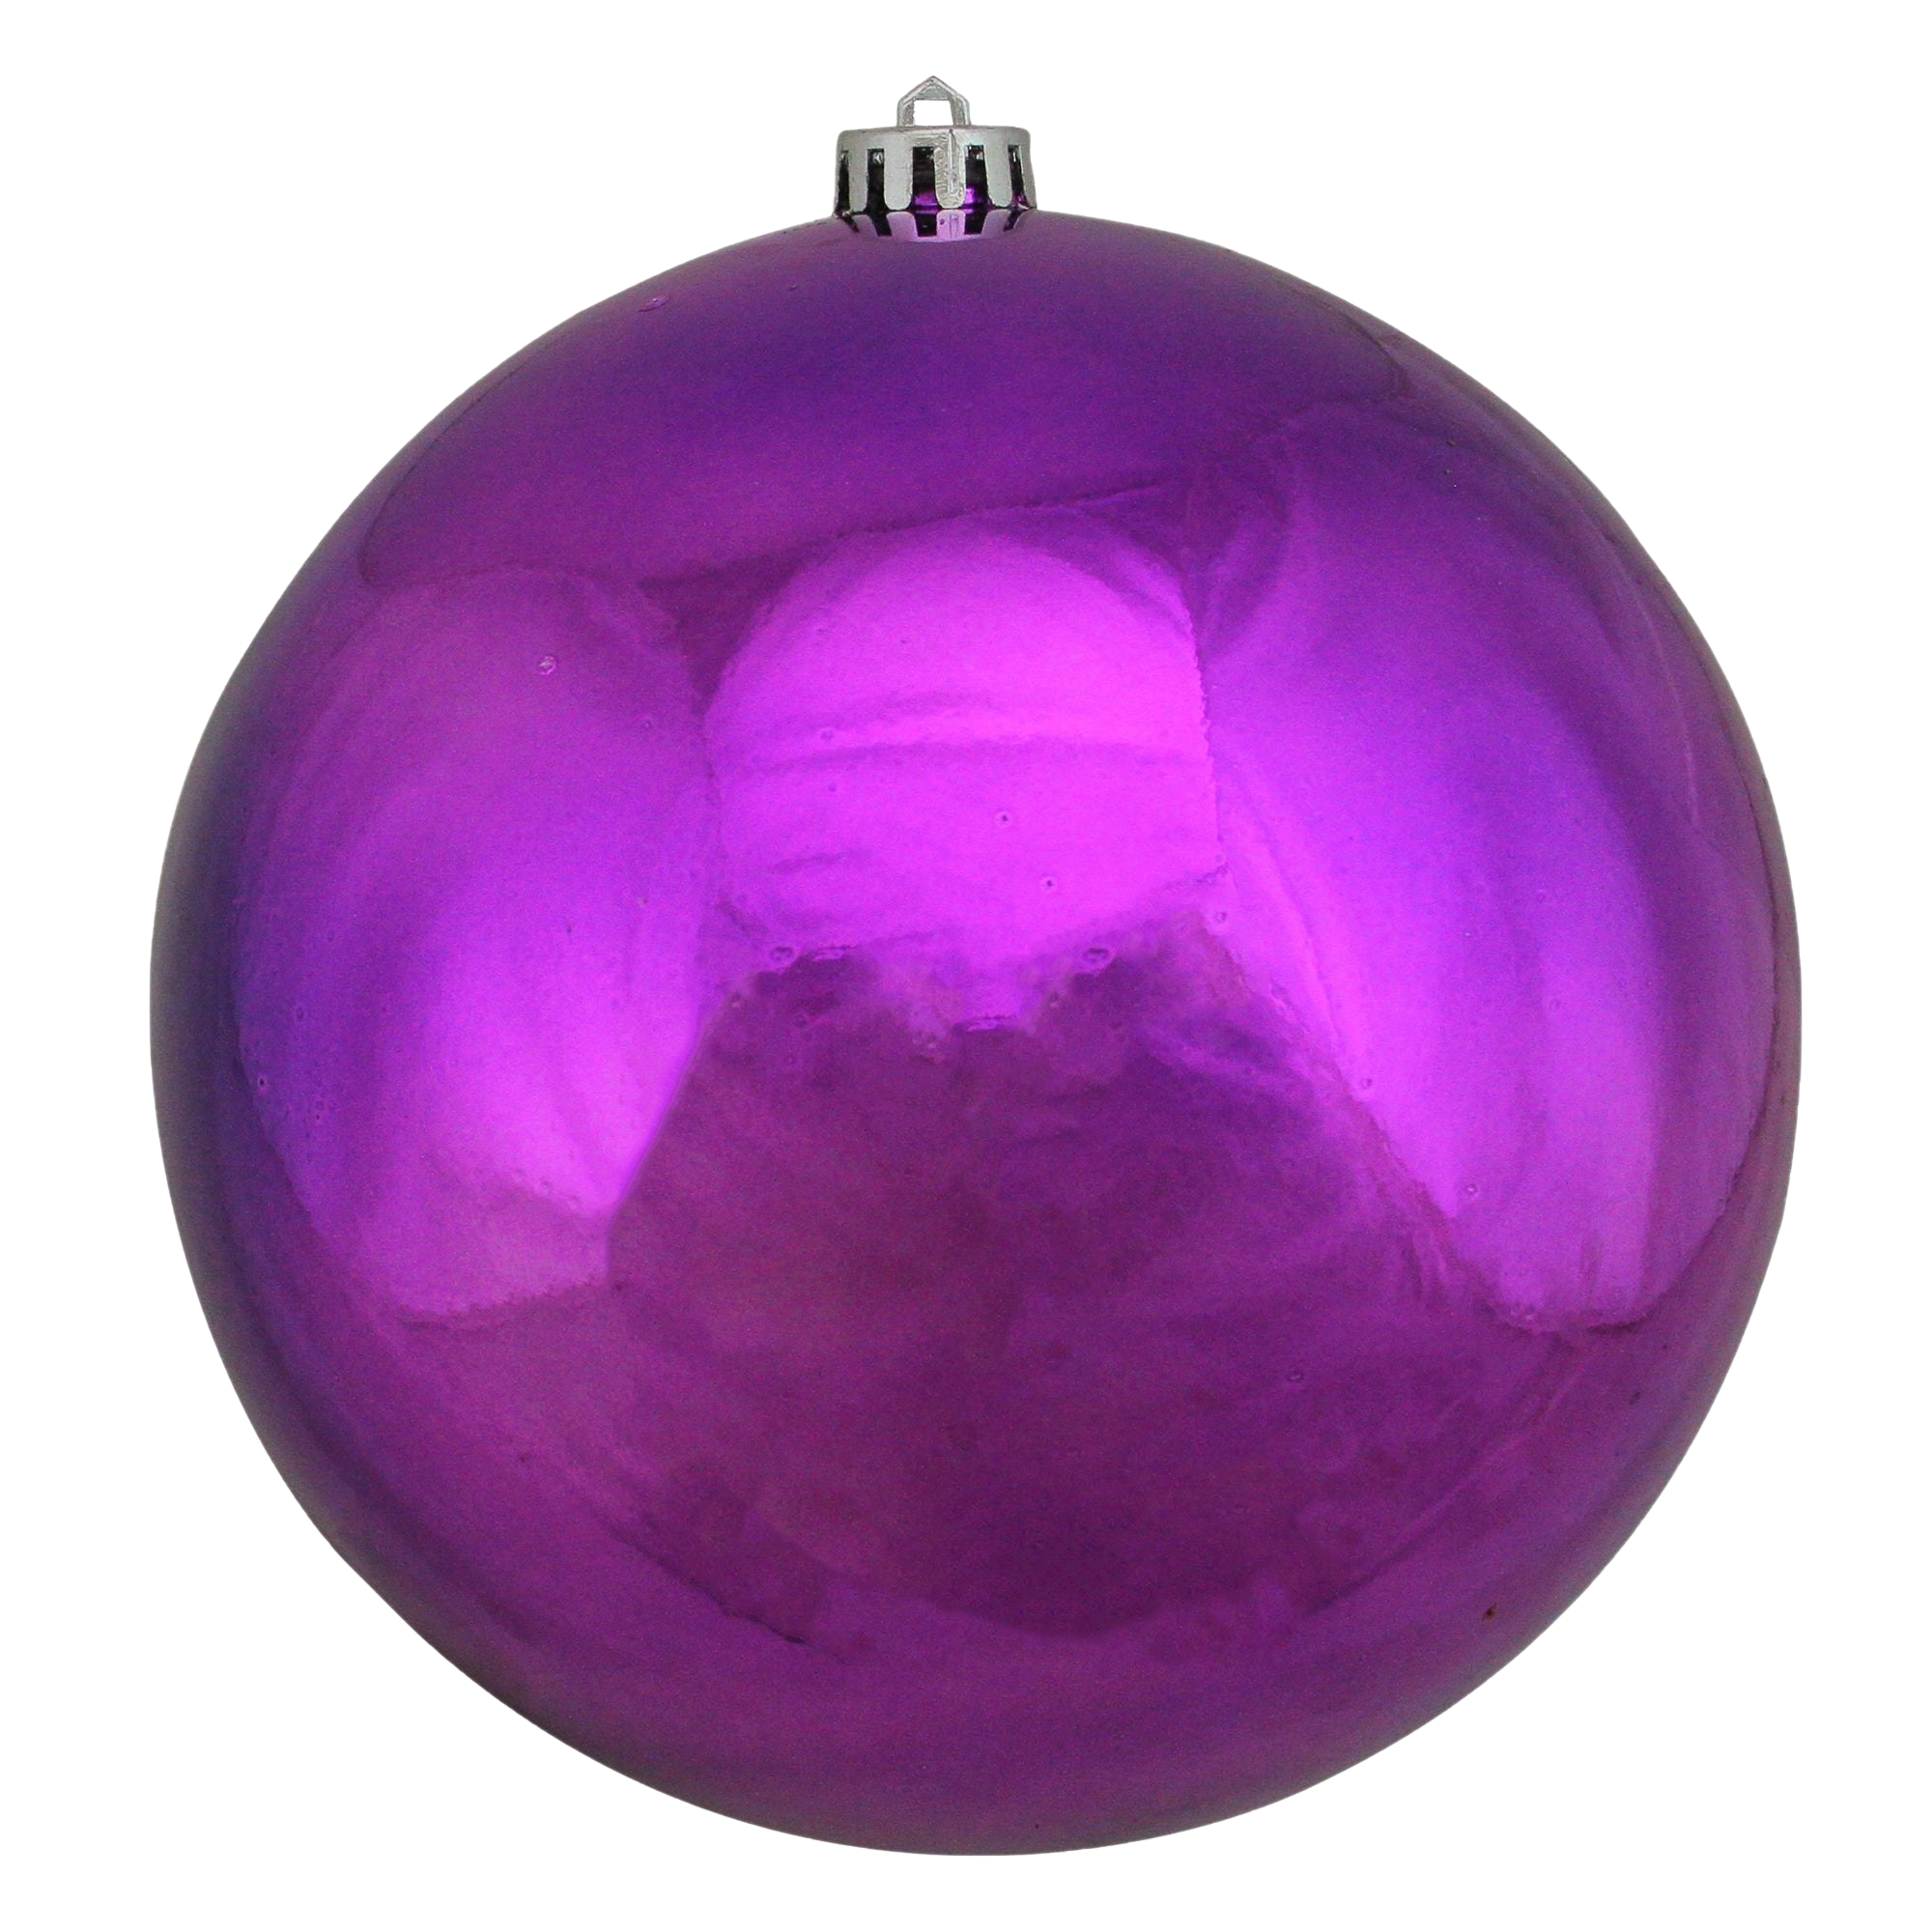 Single Purple Christmas Ball PNG Clipart